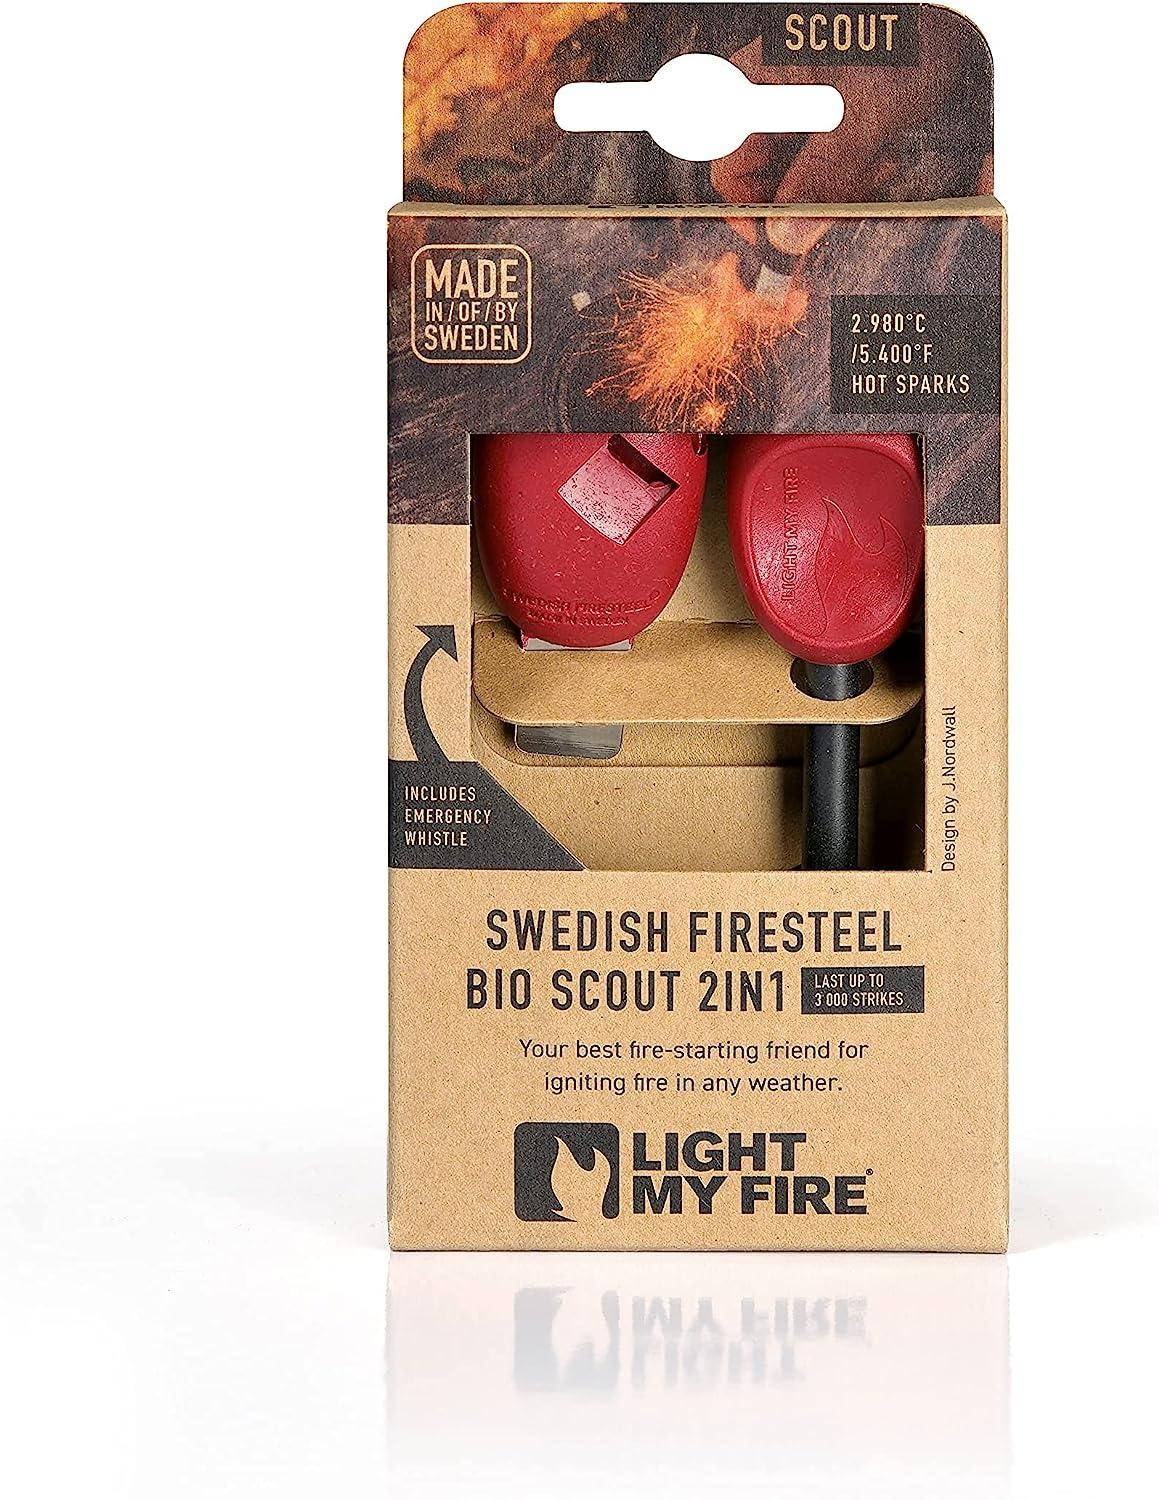 Light my Fire Firesteel Scout - Flint and Steel fire kit 1/4" Rod - Last 3 000 Strikes - Emergency Whistle Included - Made in Sweden with biobased Plastics - Swedish fire Starter Rustyorange